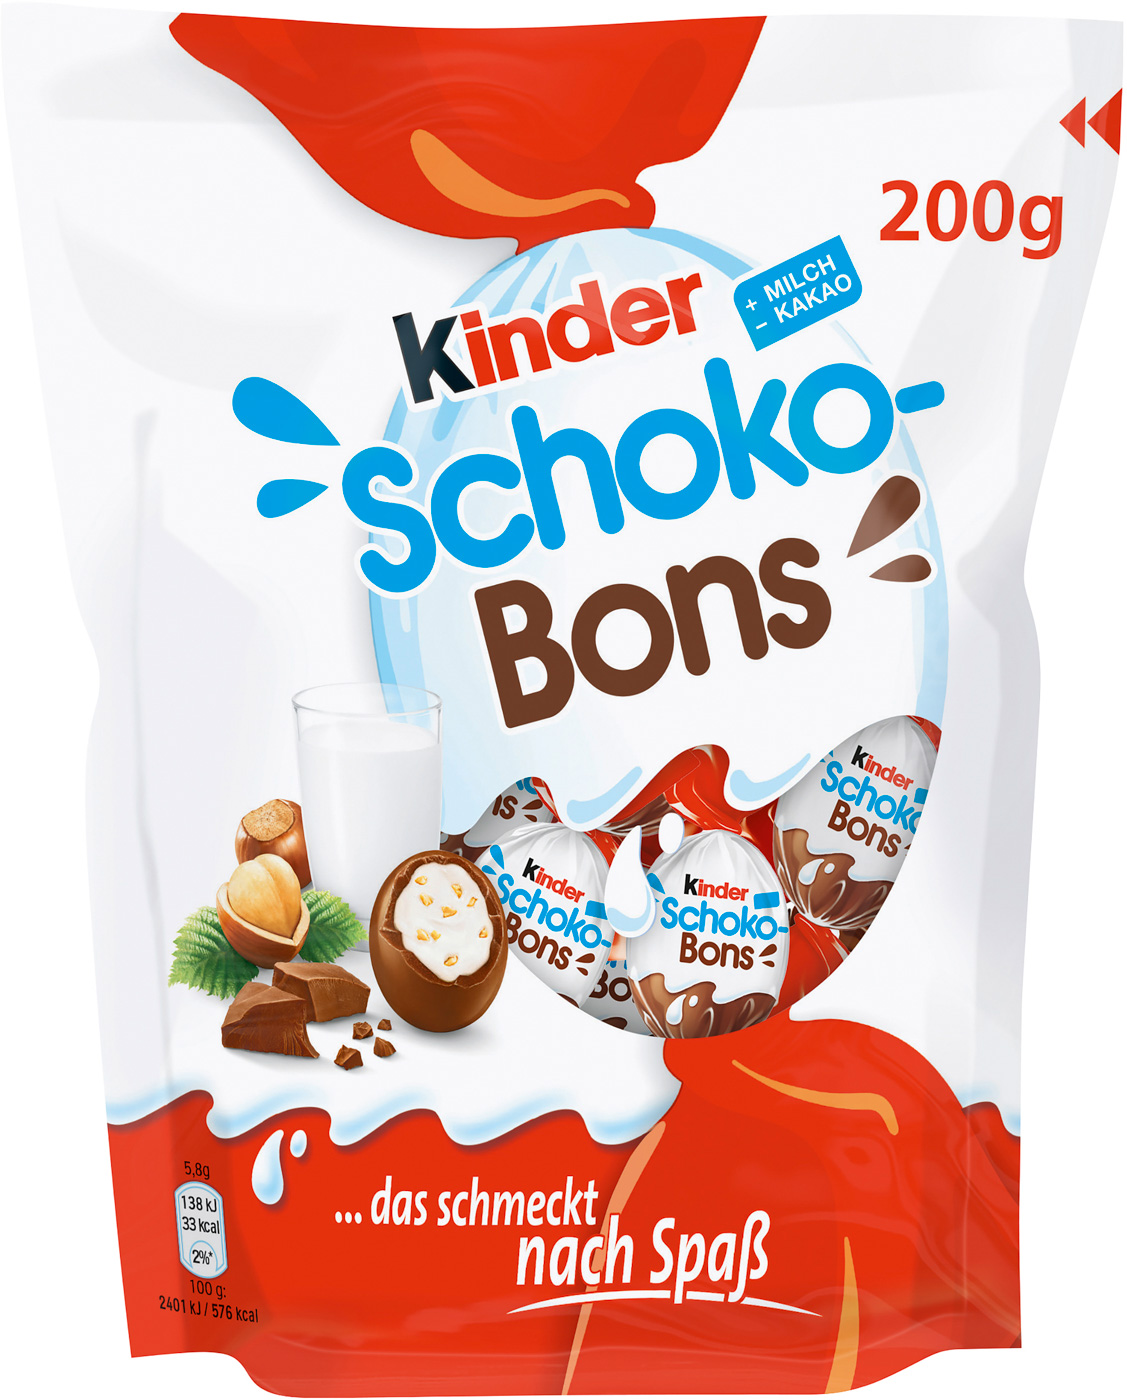 Ferrero Kinder Schoko Bons Inhalt: 34 Stück, 200g.